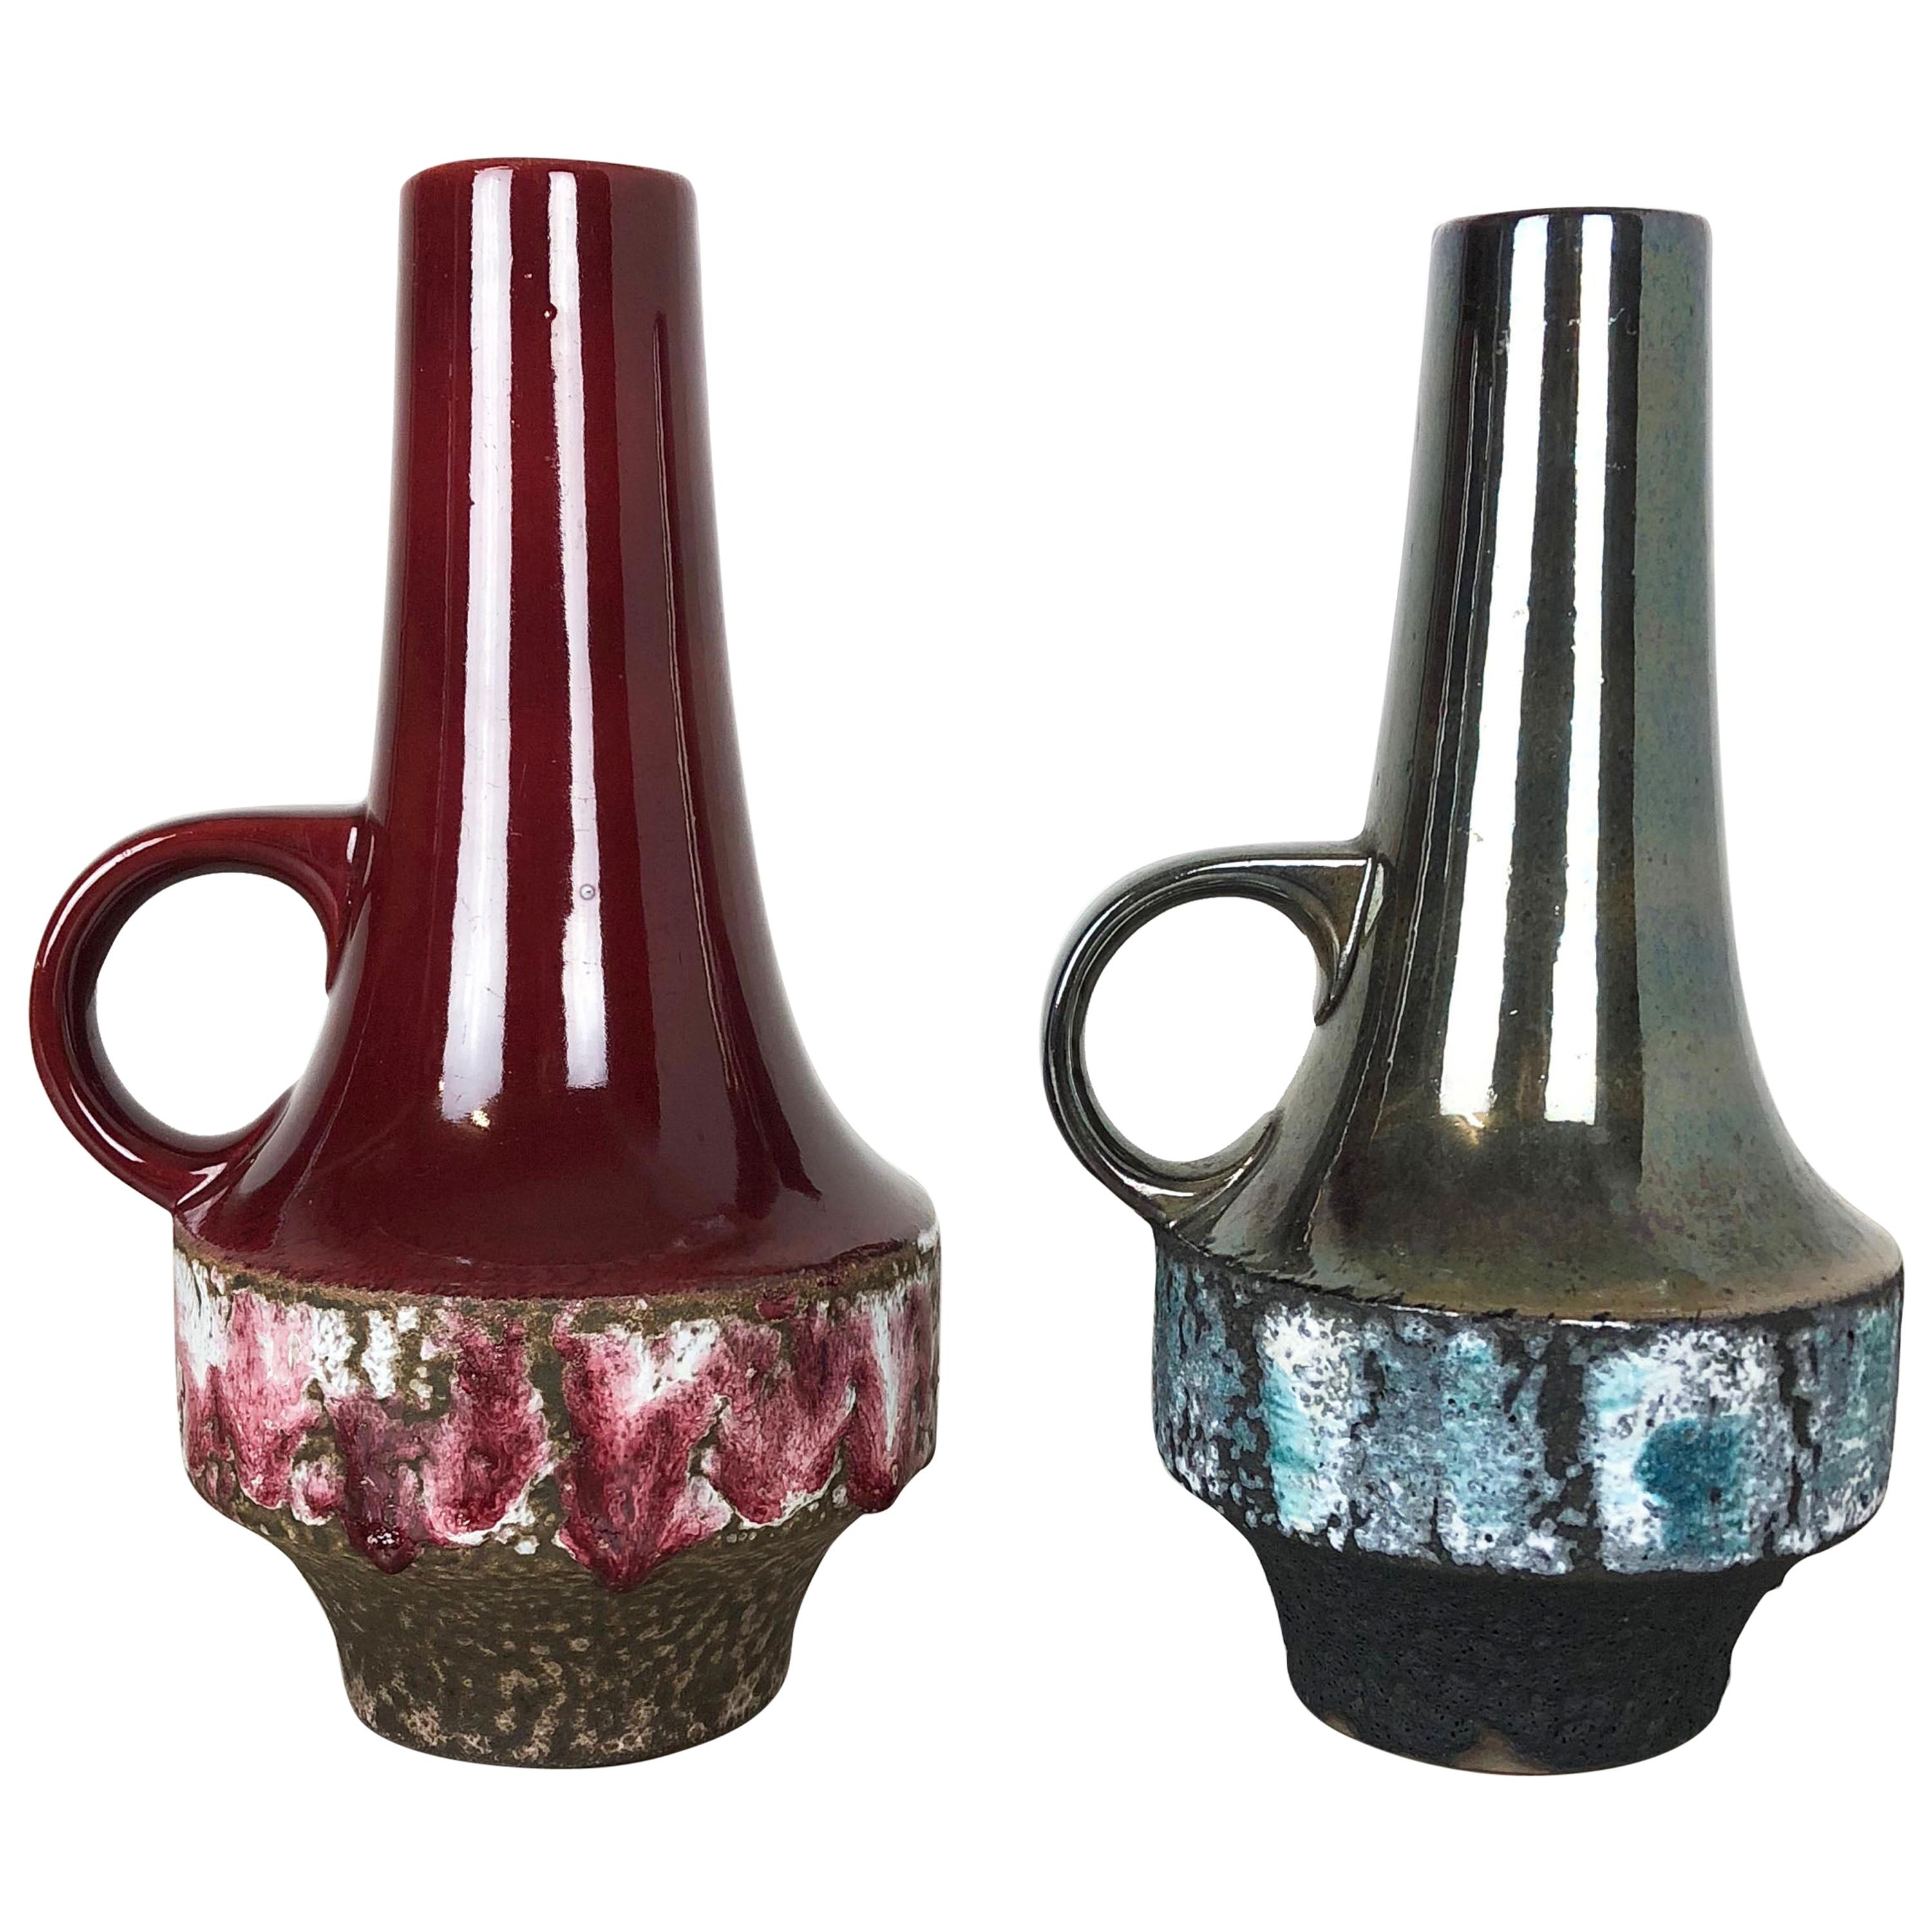 Set of 2 Ceramic Pottery Vase Heinz Siery Carstens Tönnieshof, Germany, 1970s